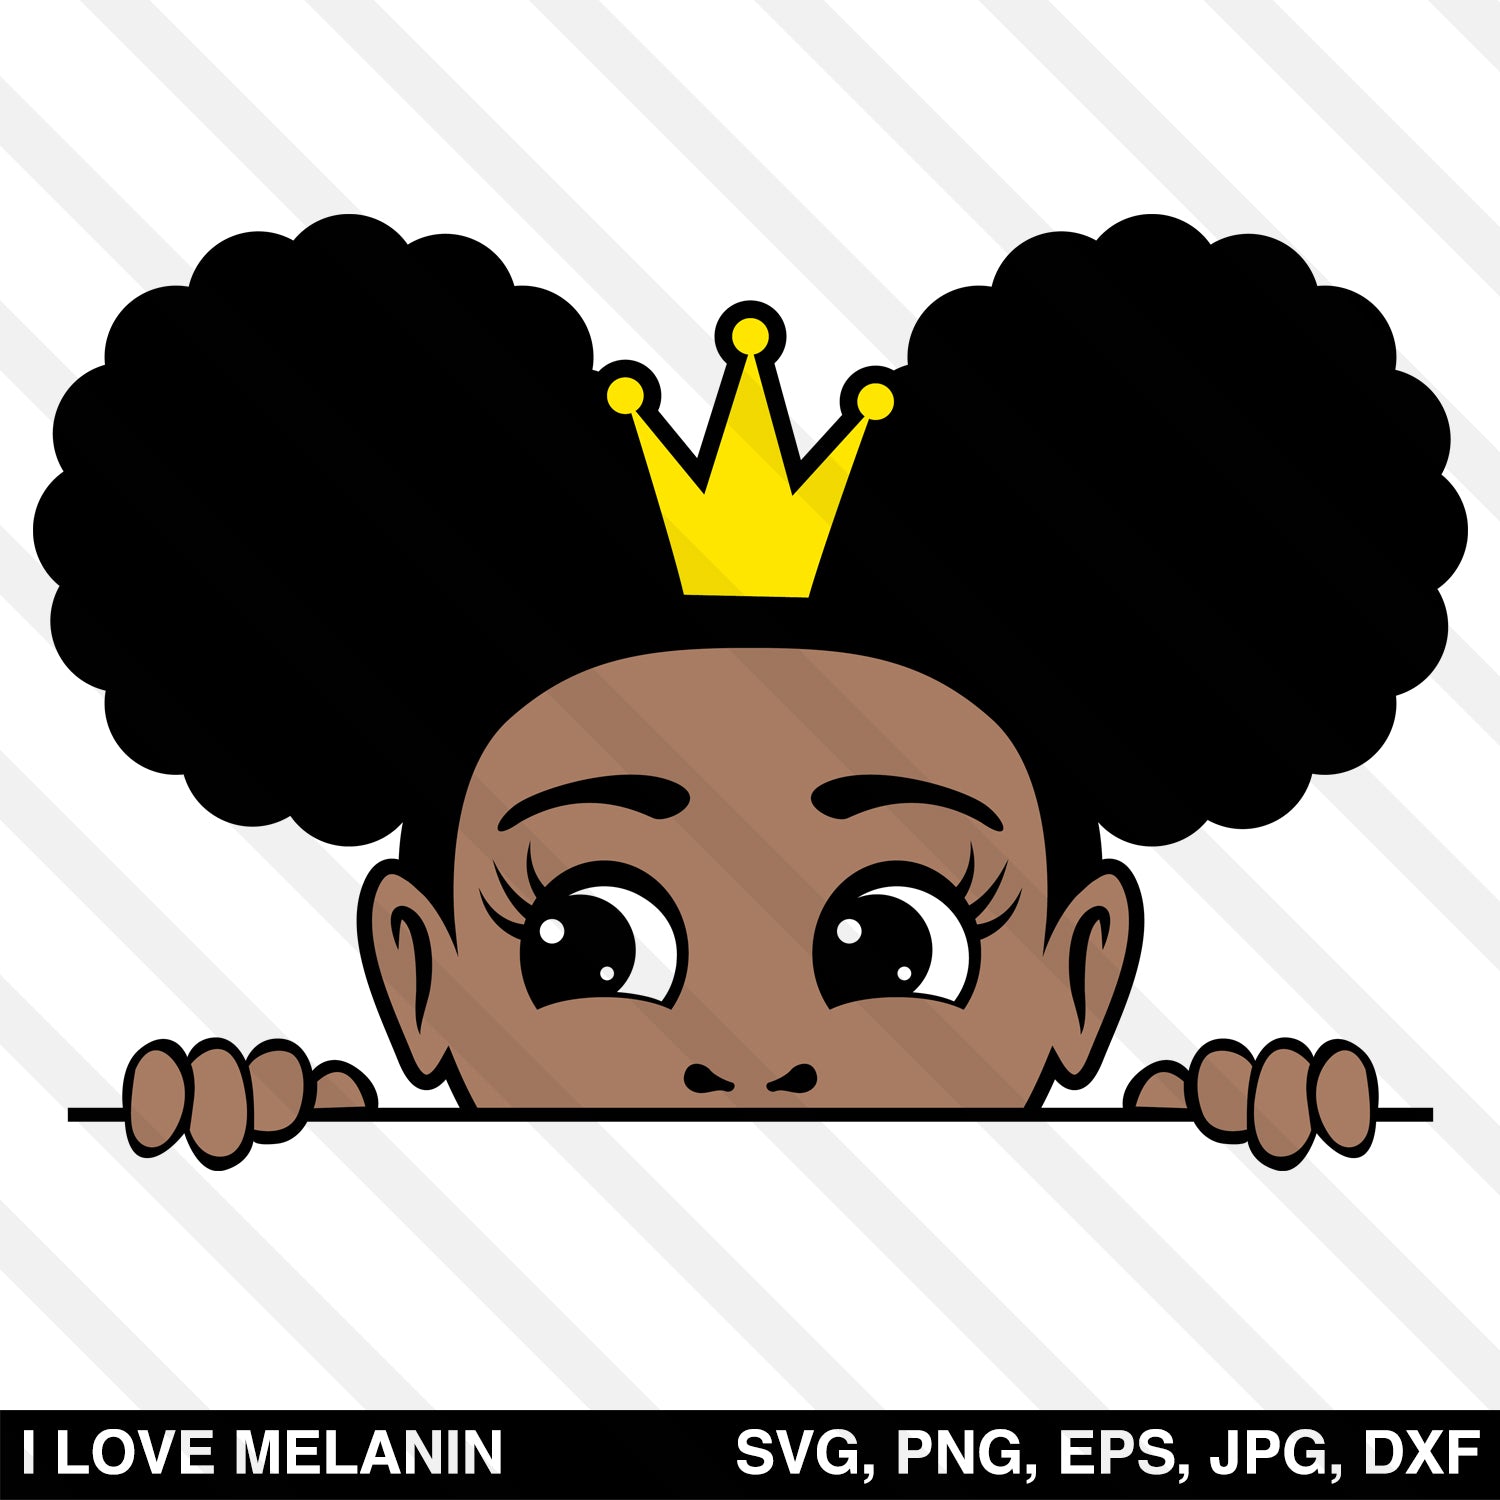 Peekaboo Afro Puffs Crown Girl SVG